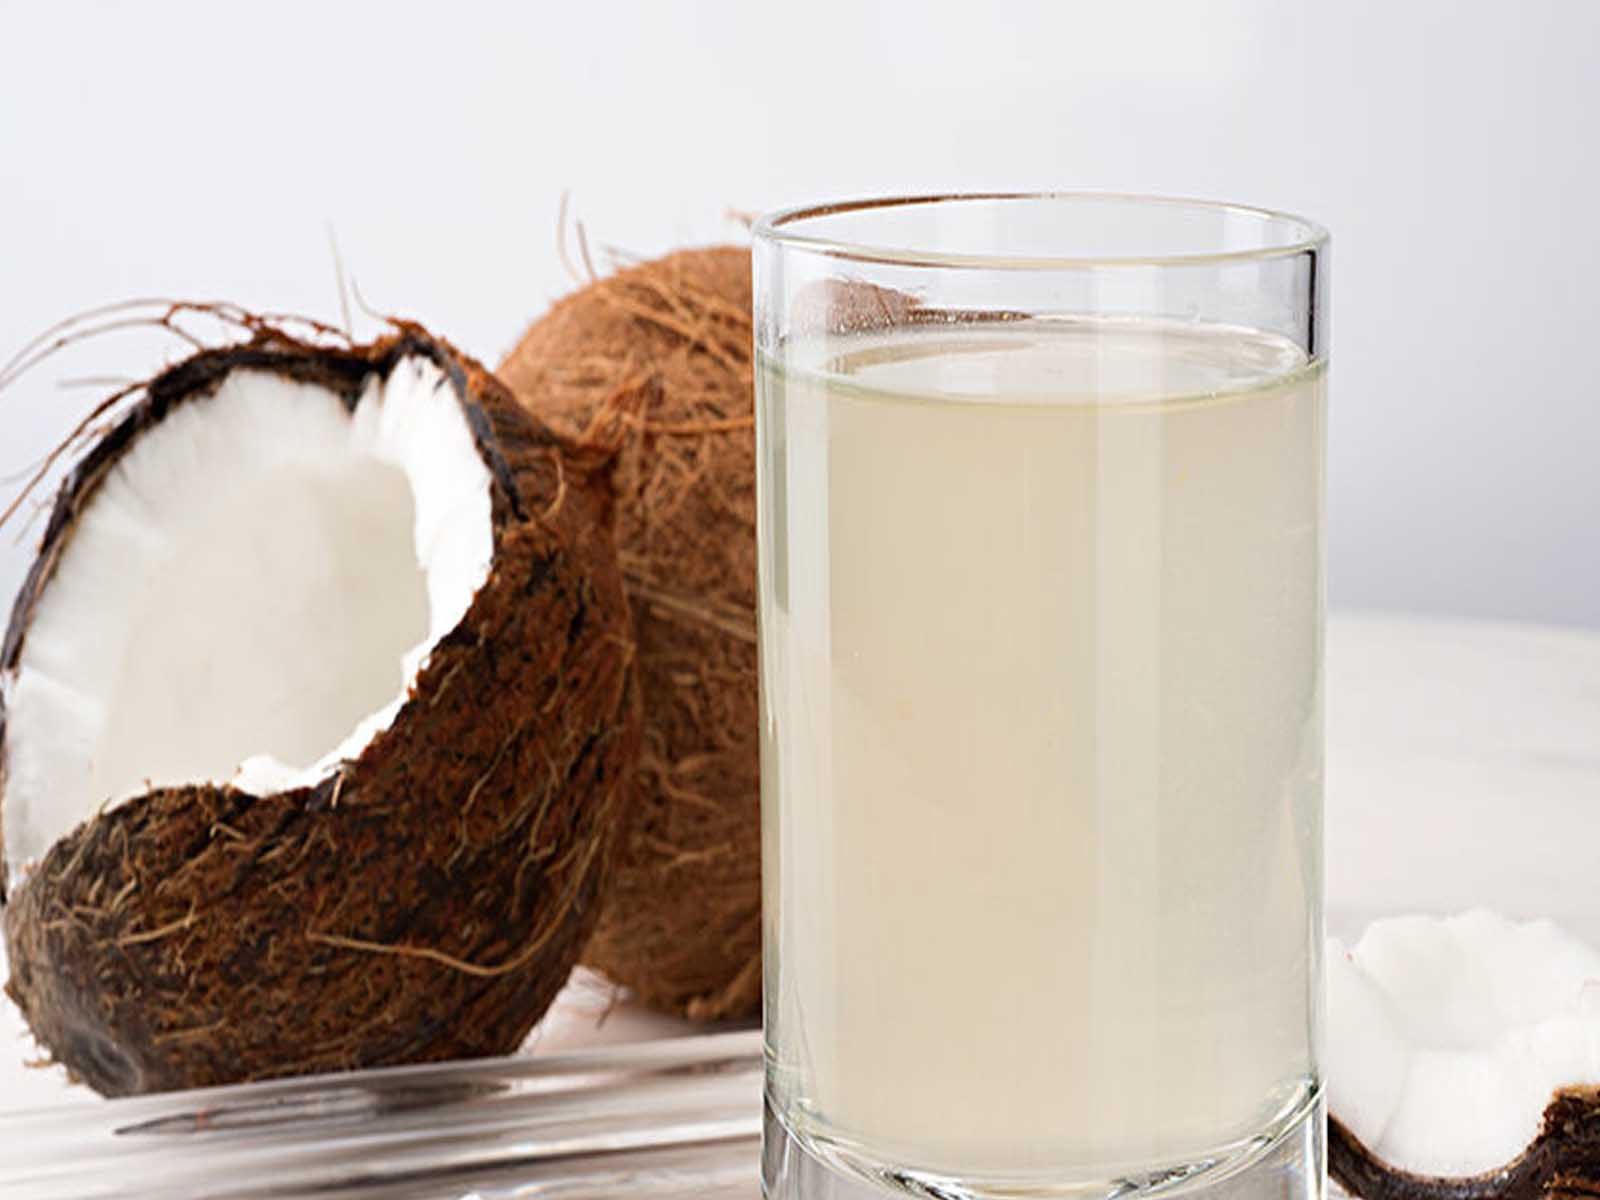 Coconut Water For Health: ਨਾਰੀਅਲ ਪਾਣੀ ਪੀਂਦੇ ਸਮੇਂ ਕਿਉਂ ਰਹਿਣਾ ਚਾਹੀਦਾ ਹੈ ਸਾਵਧਾਨ, ਪੜ੍ਹੋ ਇਸ ਖਬਰ ਰਾਹੀਂ